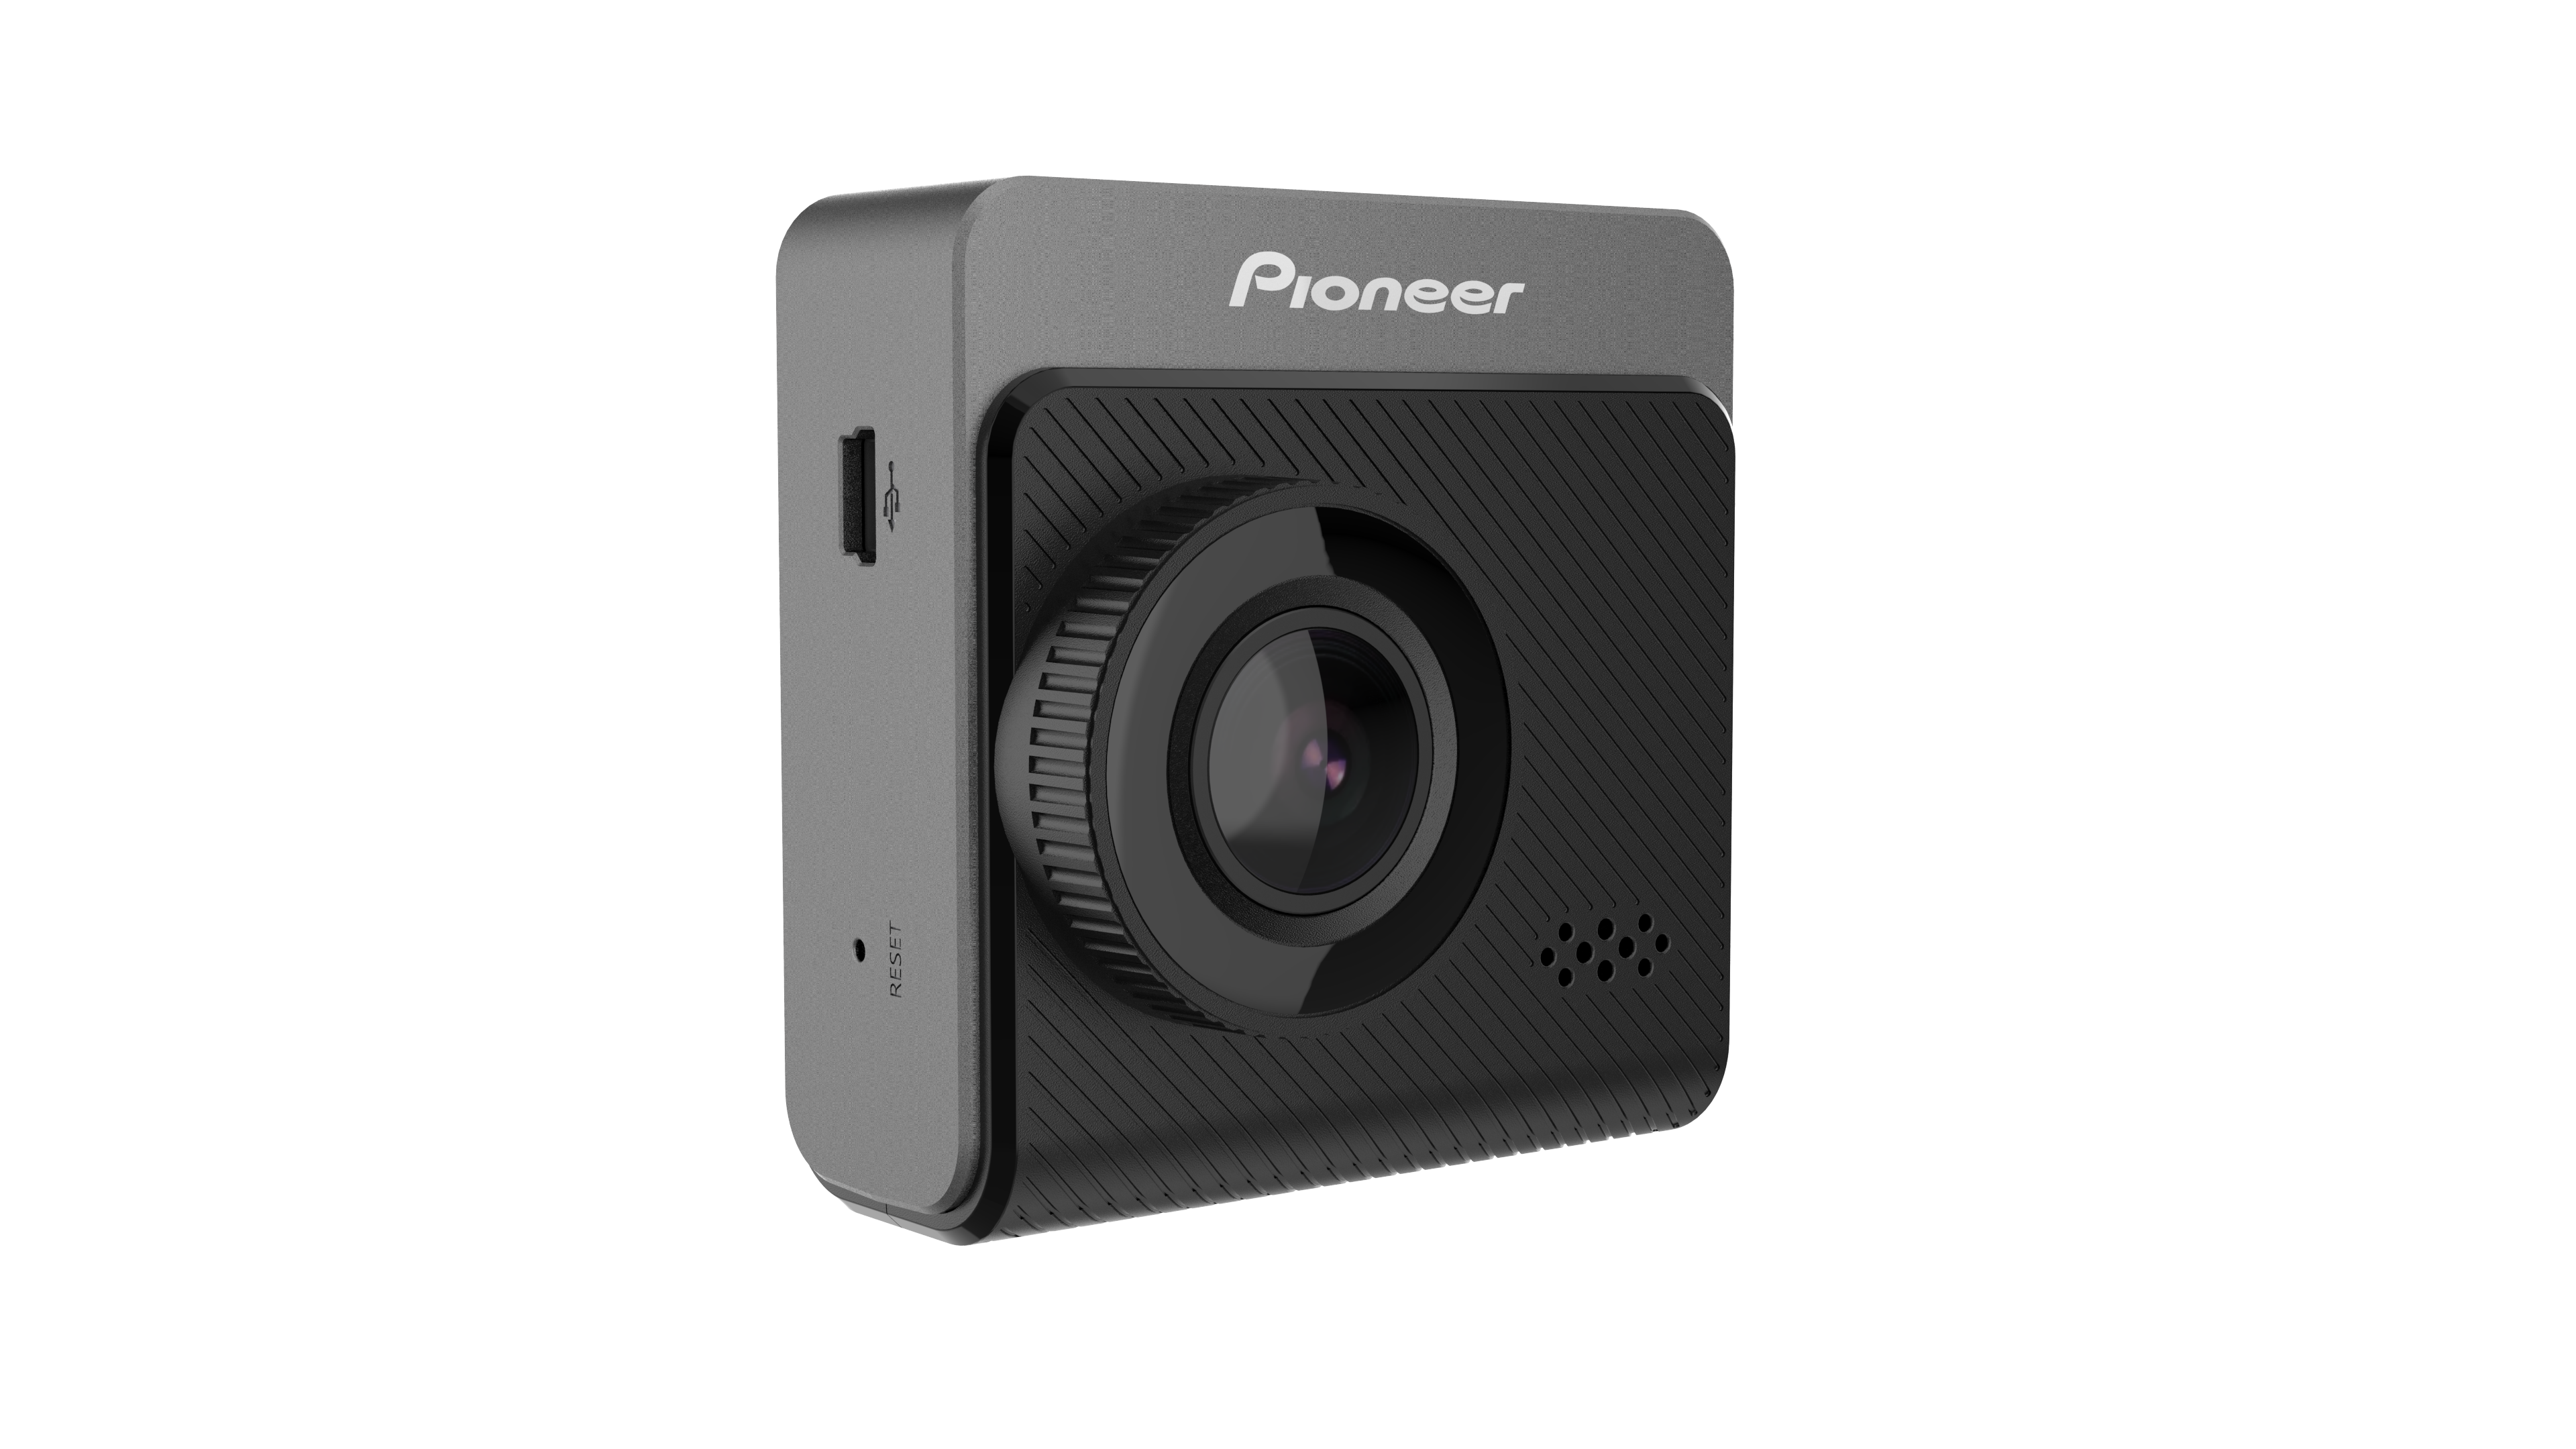 Pioneer Full HD Kojelautakamera VREC-130RS